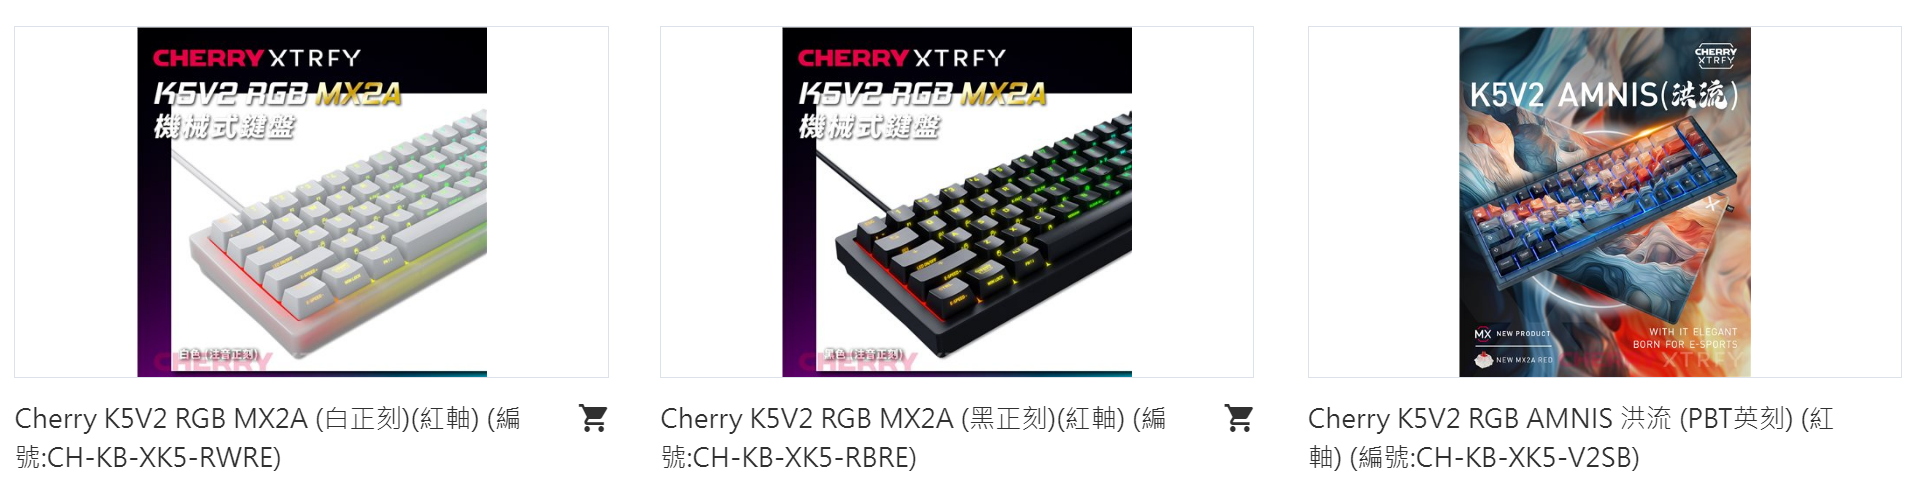 cherryxtrfyk5v2mx2a 001